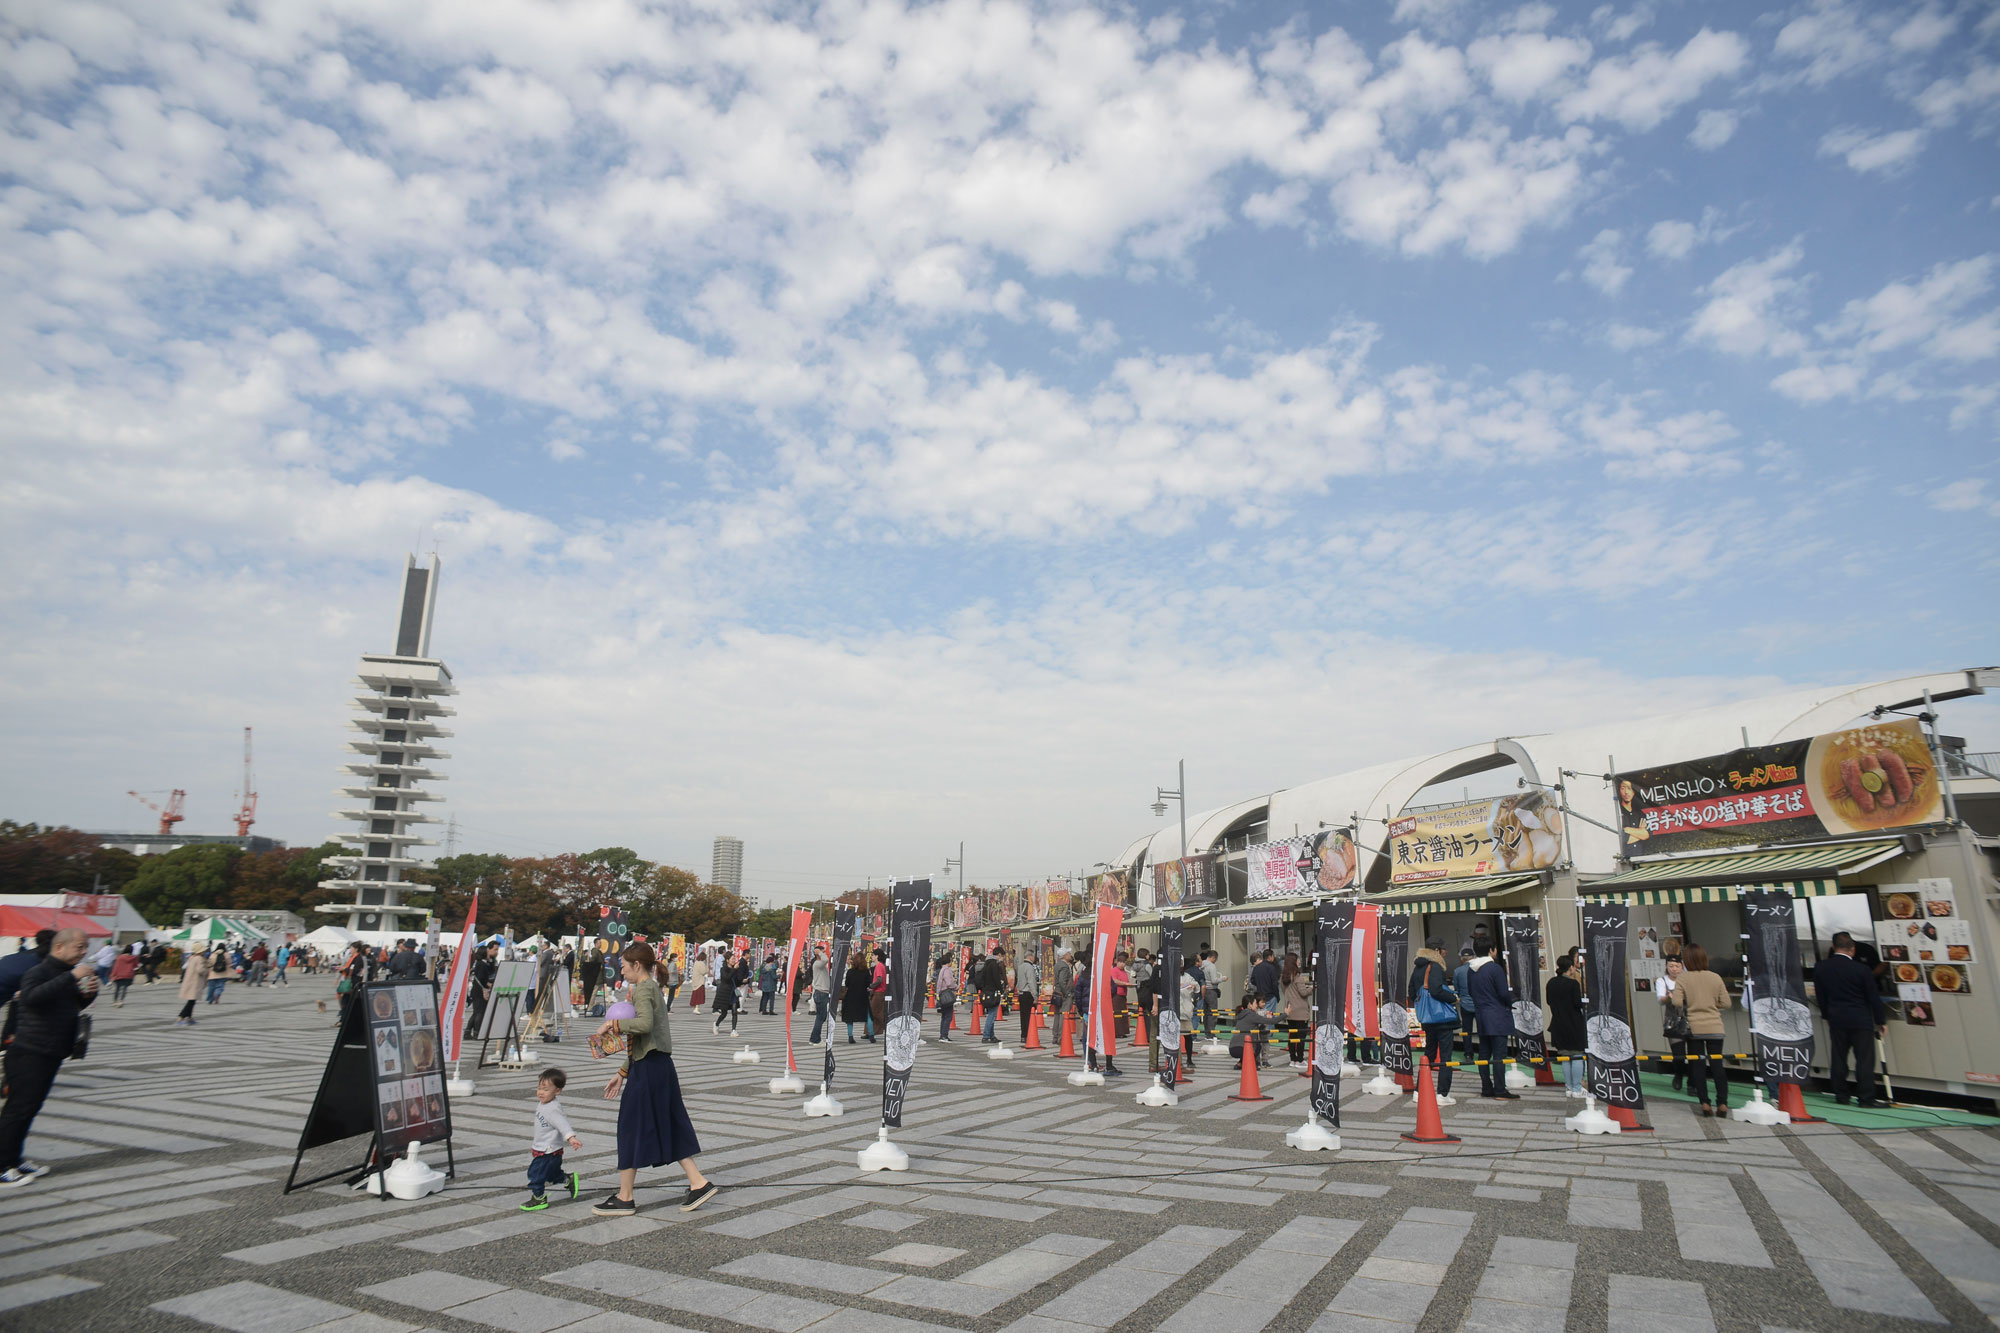 Das Festival findet im Komazawa-Olympiapark in Tokio statt.